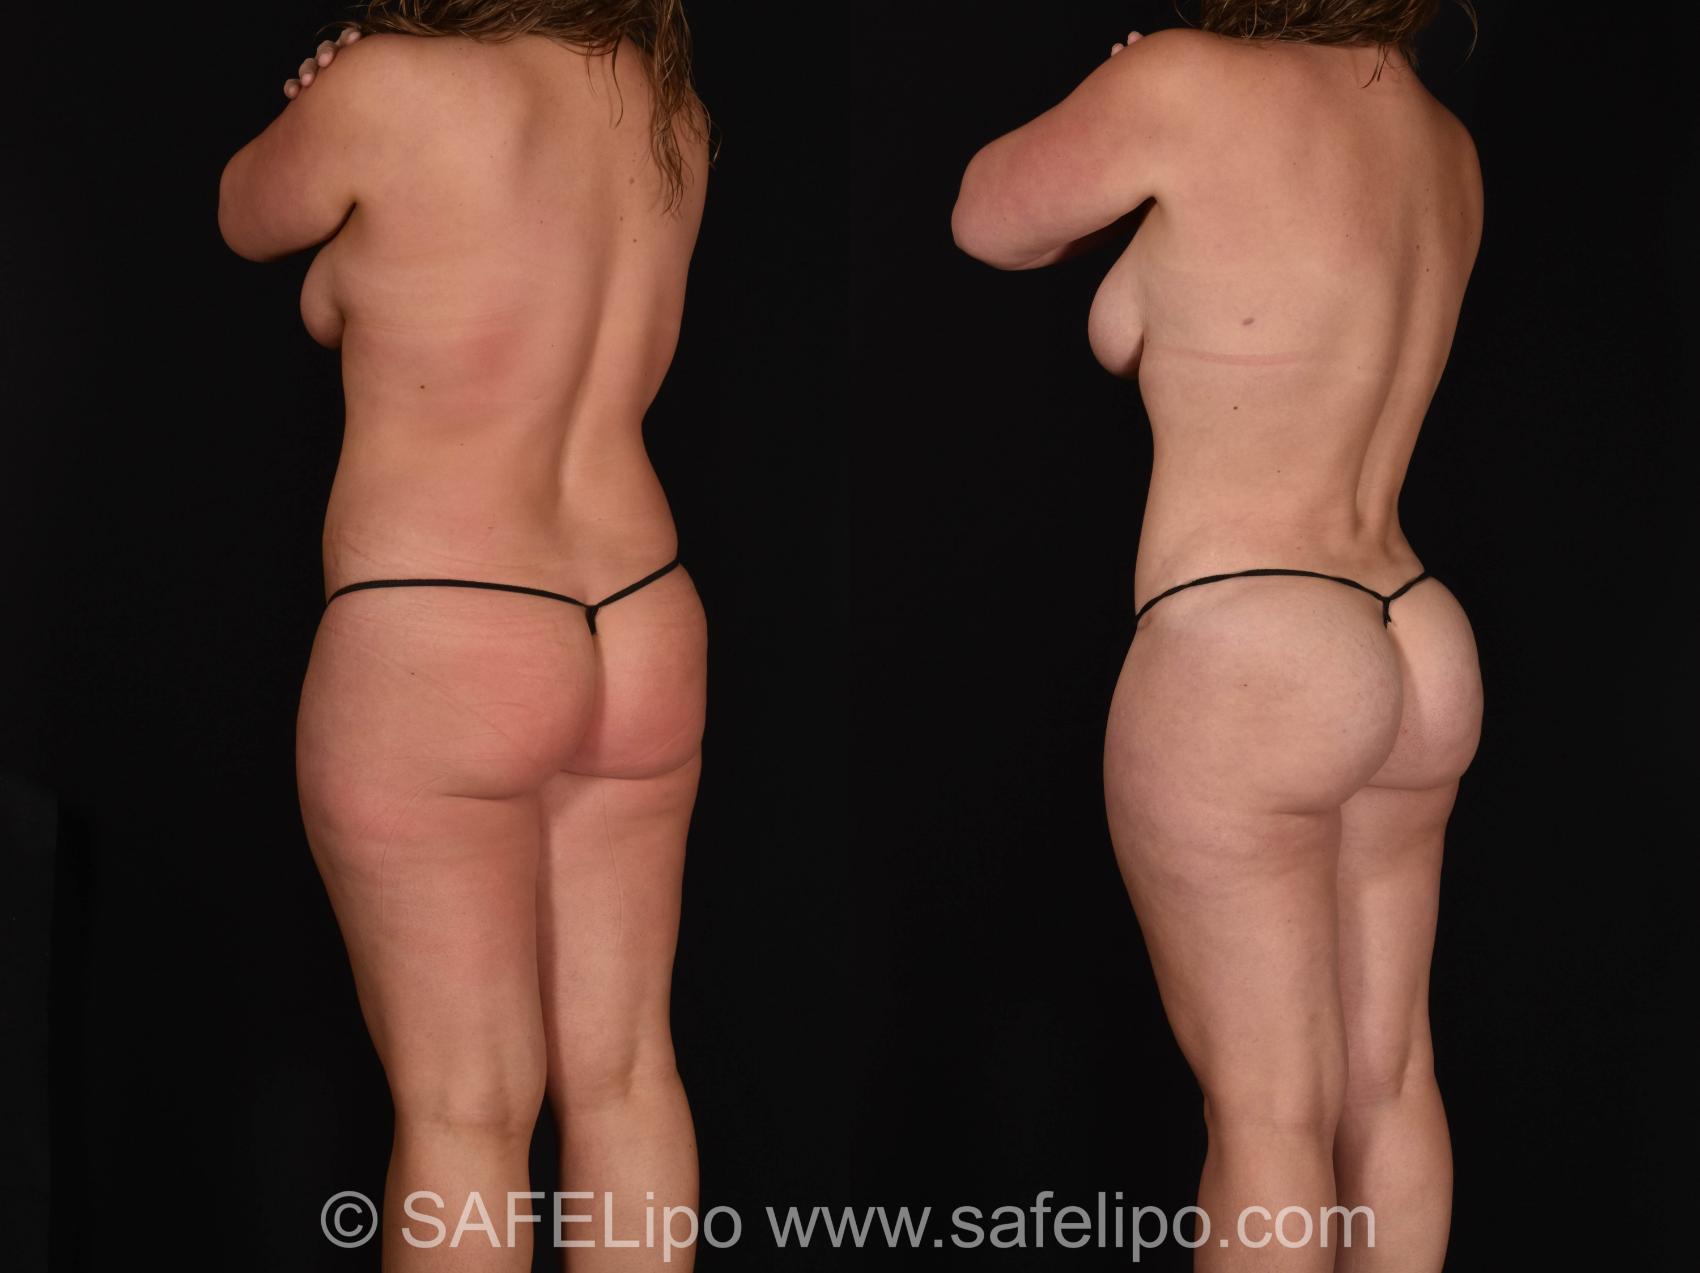 SAFELipo Back Left Oblique Photo, Shreveport, LA, The Wall Center for Plastic Surgery, Case 1009